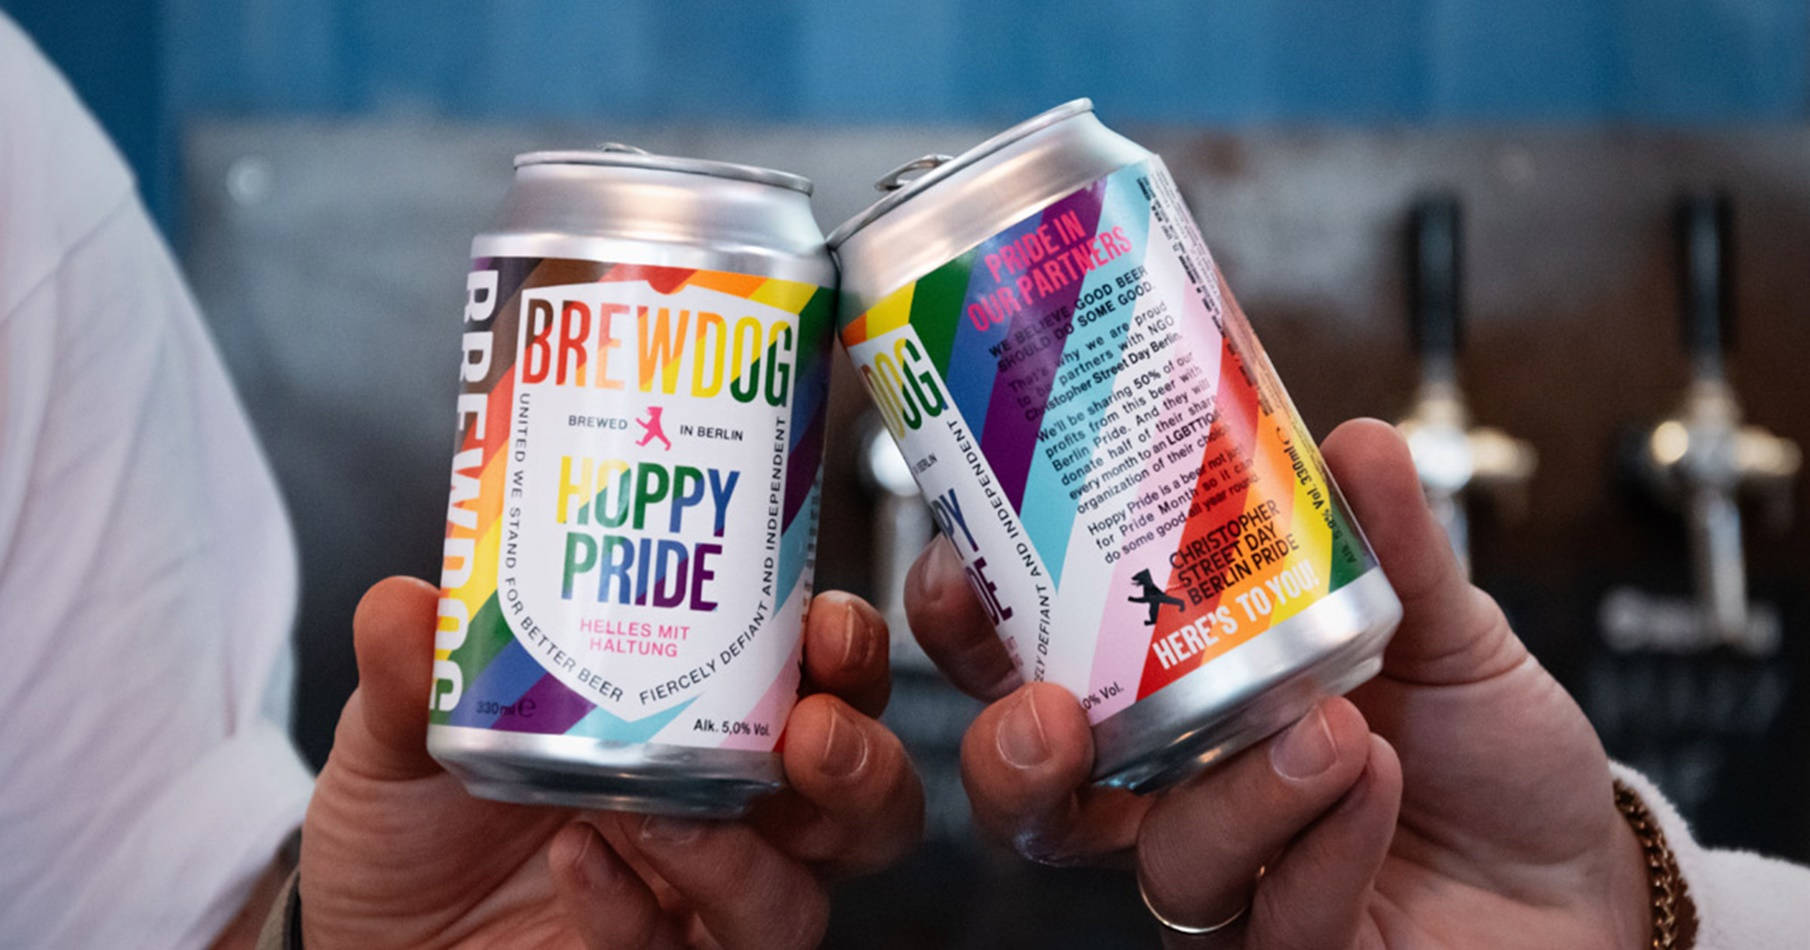 Brewdog Hoppy Pride Beer Cans Picture